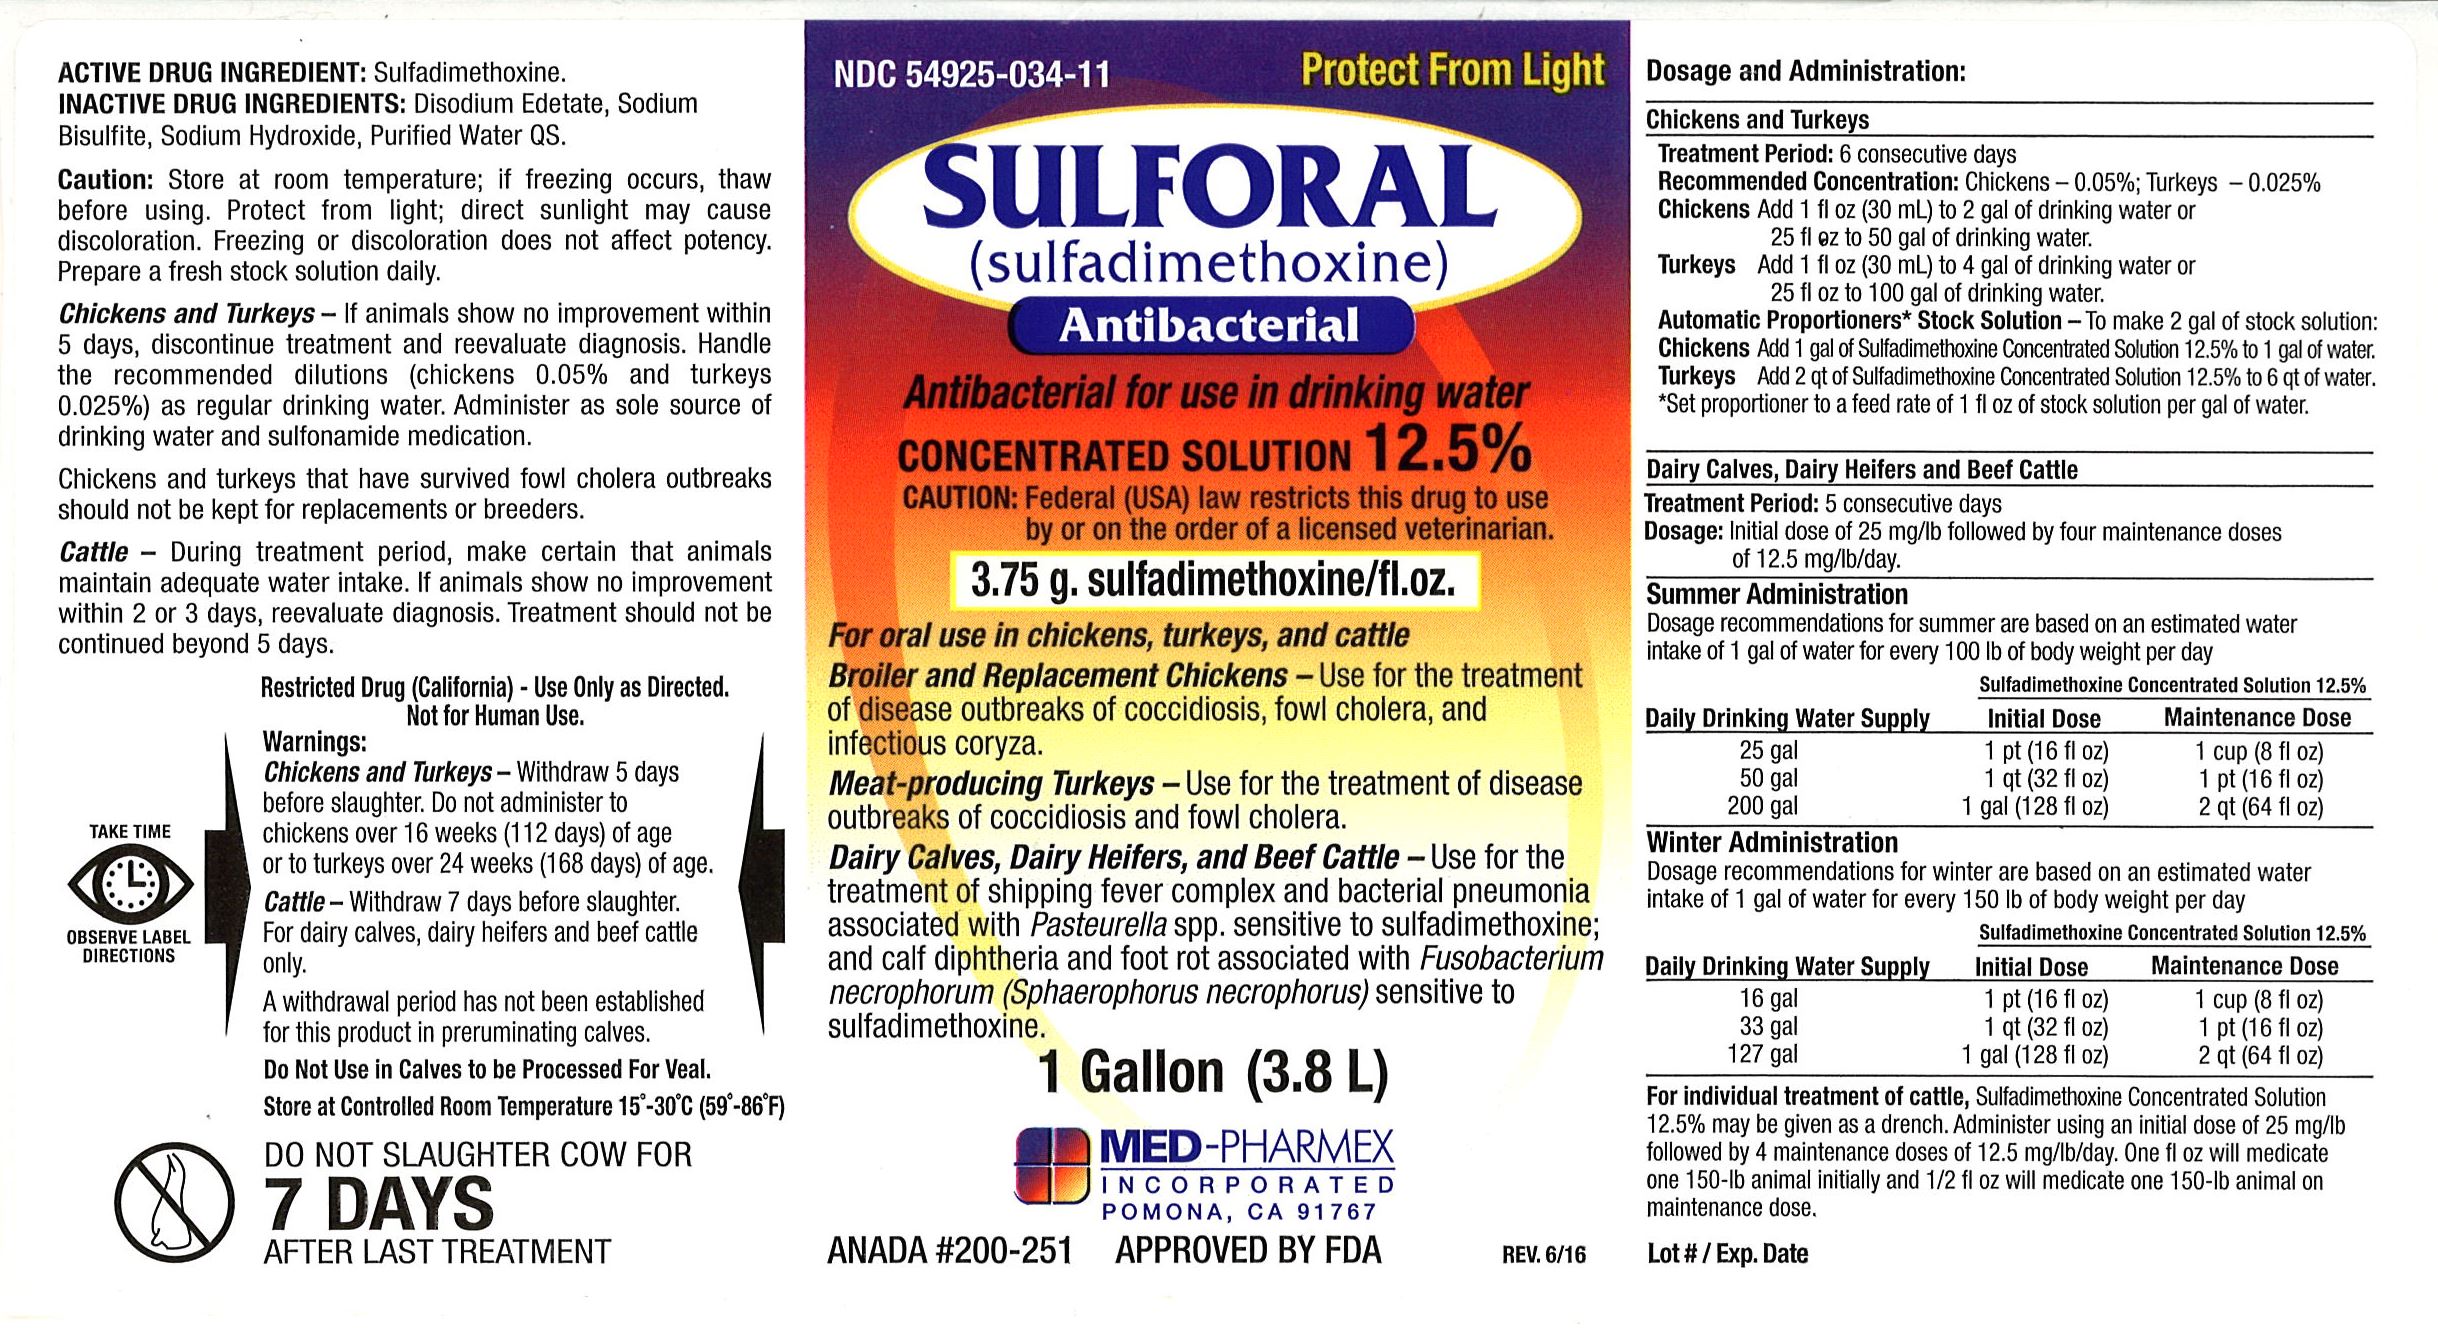 Sulforal Label